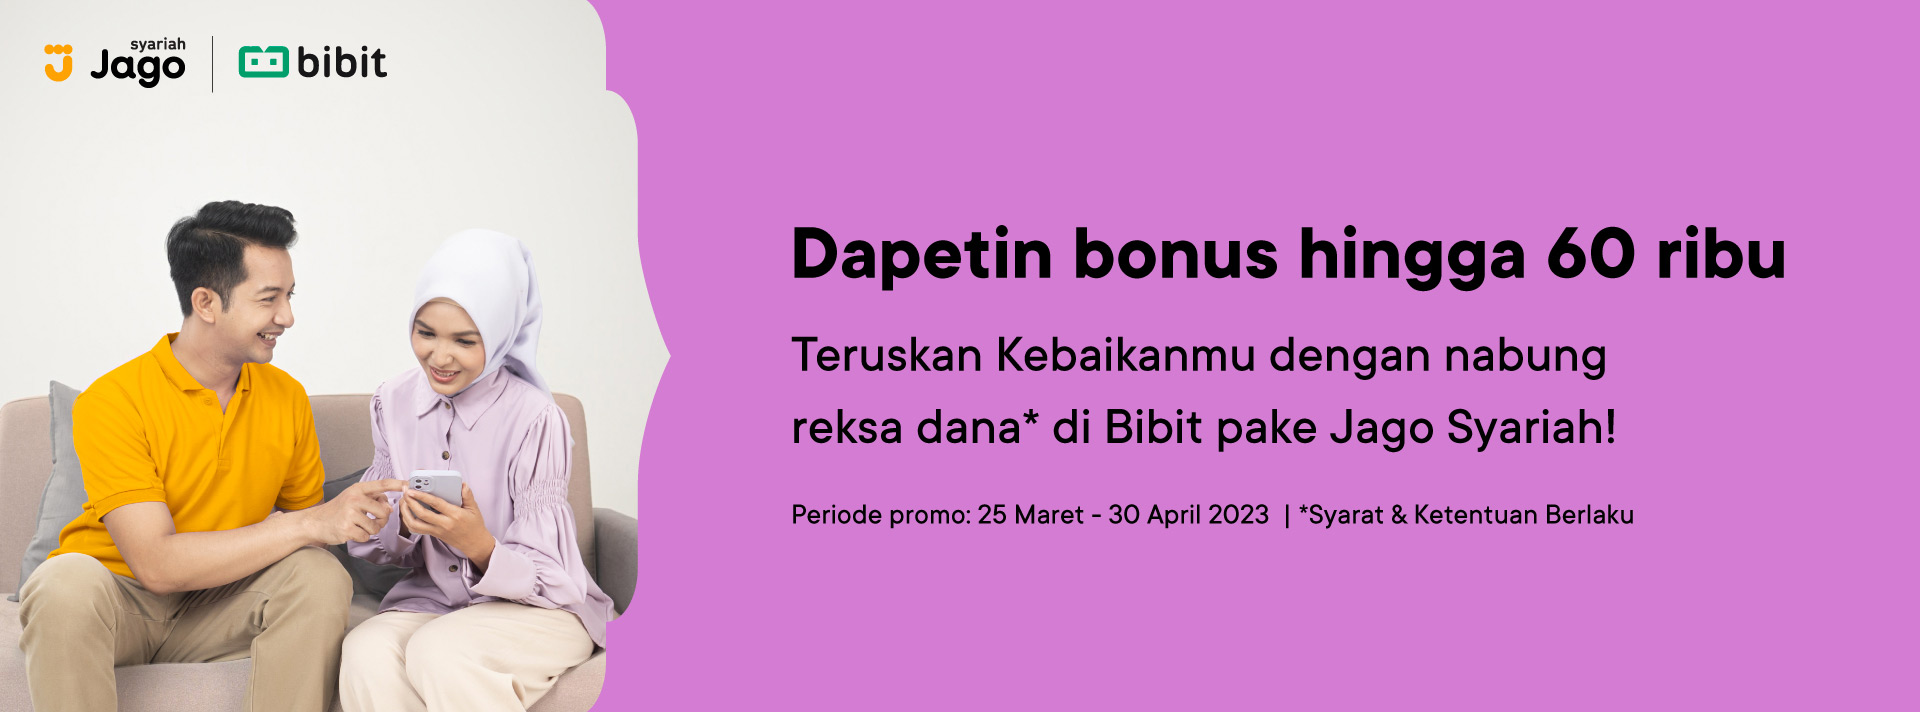 Jago x Bibit KEJUTAN! Bebas biaya transaksi di Bibit + cashback 35 ribu.